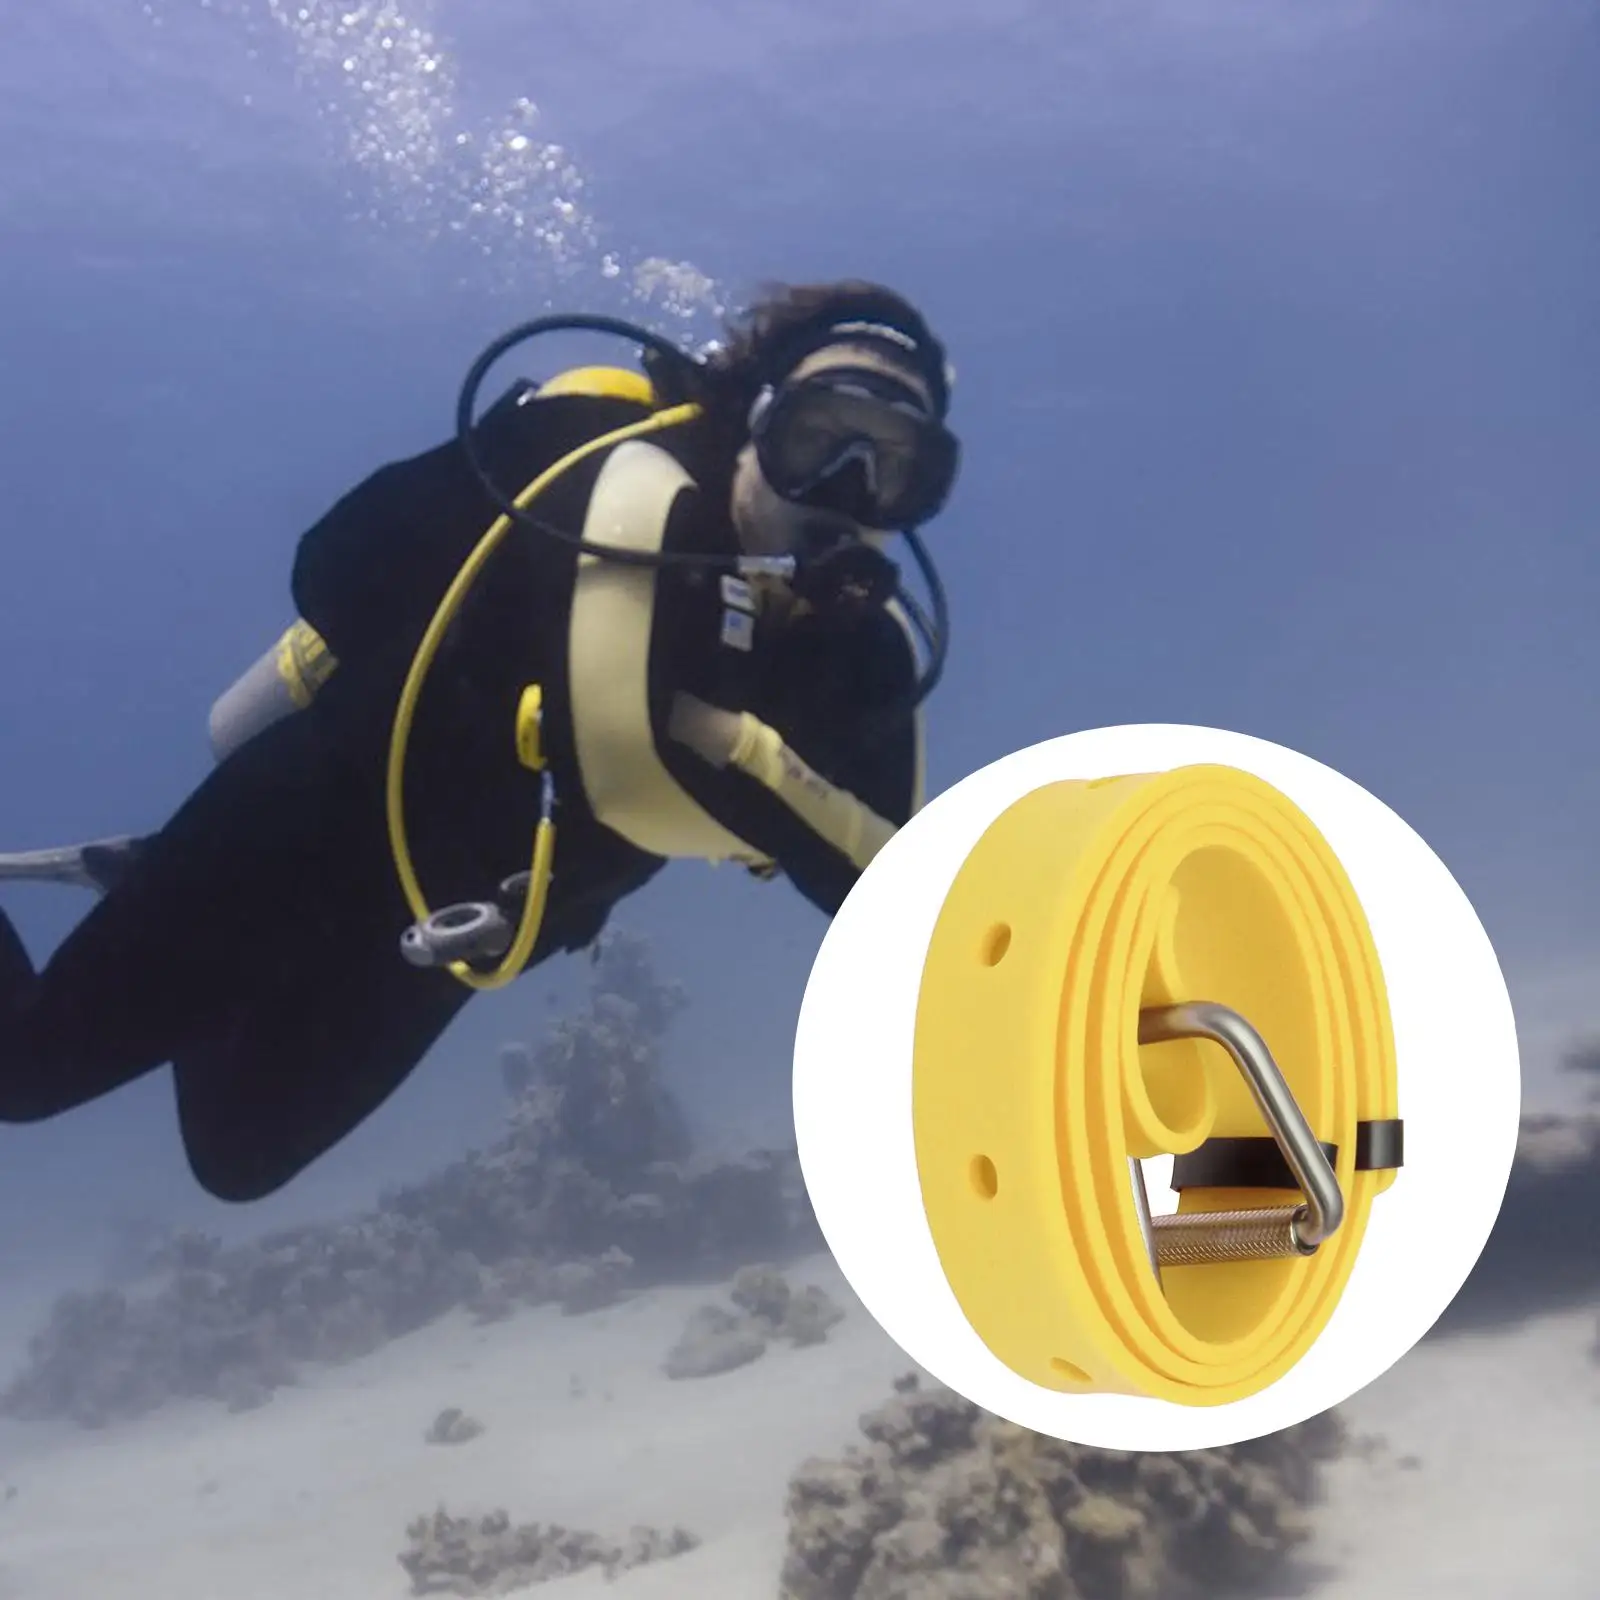 1.3M Diving Weight Belt Diving Weight Webbing with Buckle Belt Equipment for Outdoor Water Sport Snorkeling Scuba Diving